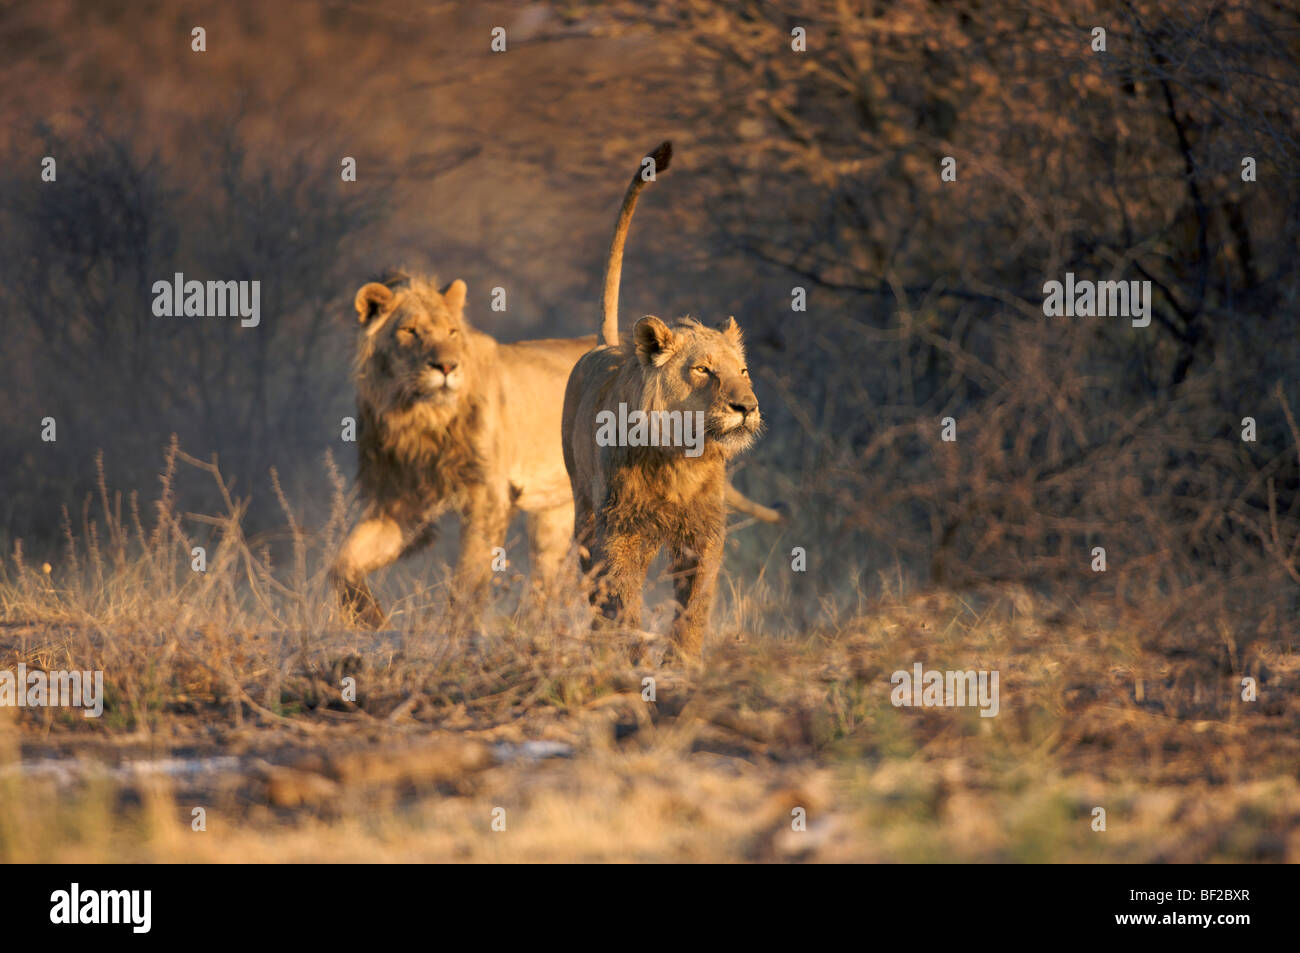 Coppia di leoni maschio (Panthera leo) acceso, Namibia. Foto Stock